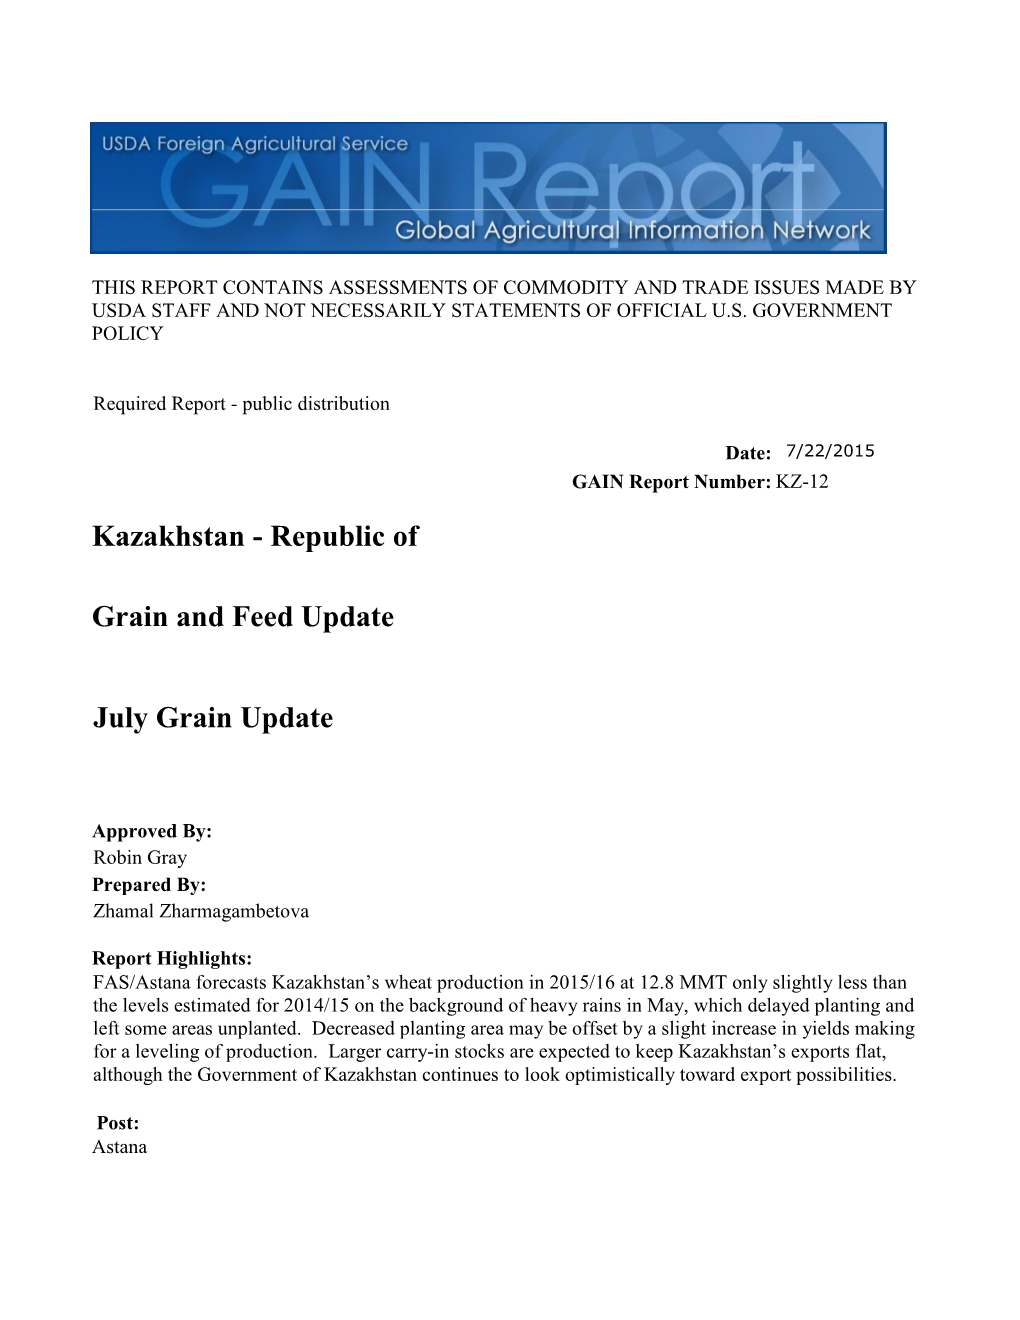 July Grain Update Grain and Feed Update Kazakhstan